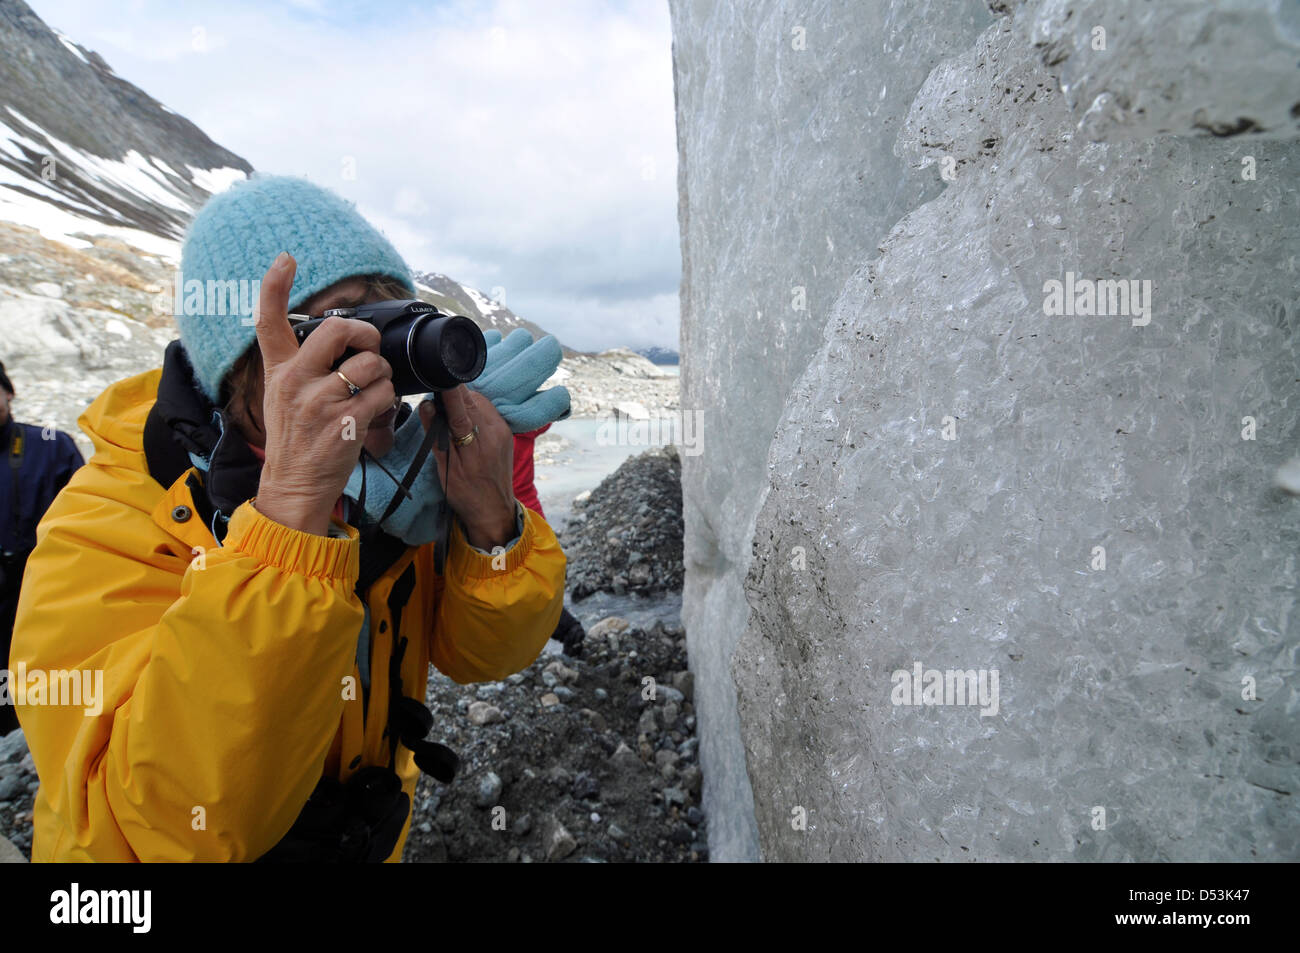 Photographing the Reid Glacier up close, Glacier Bay National Park, Alaska. Stock Photo